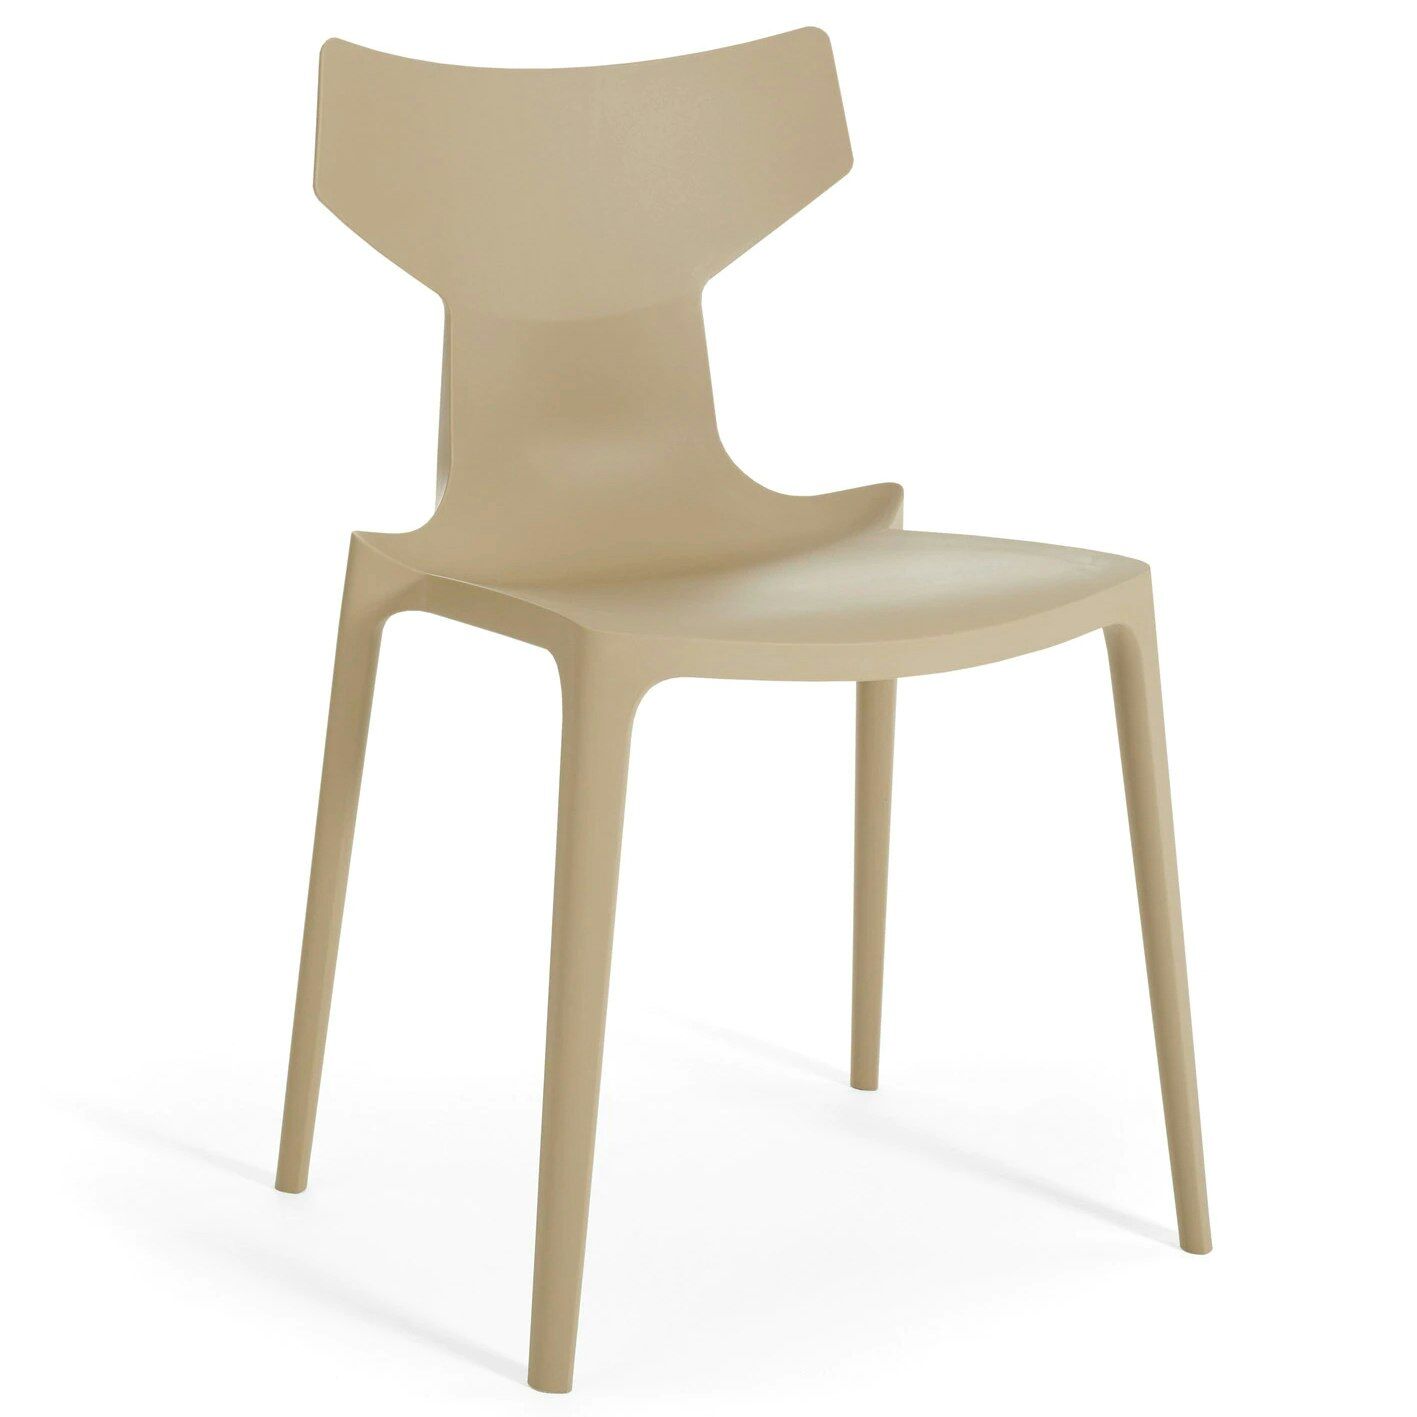 Kartell -Re-Chair Stol, Dove grey